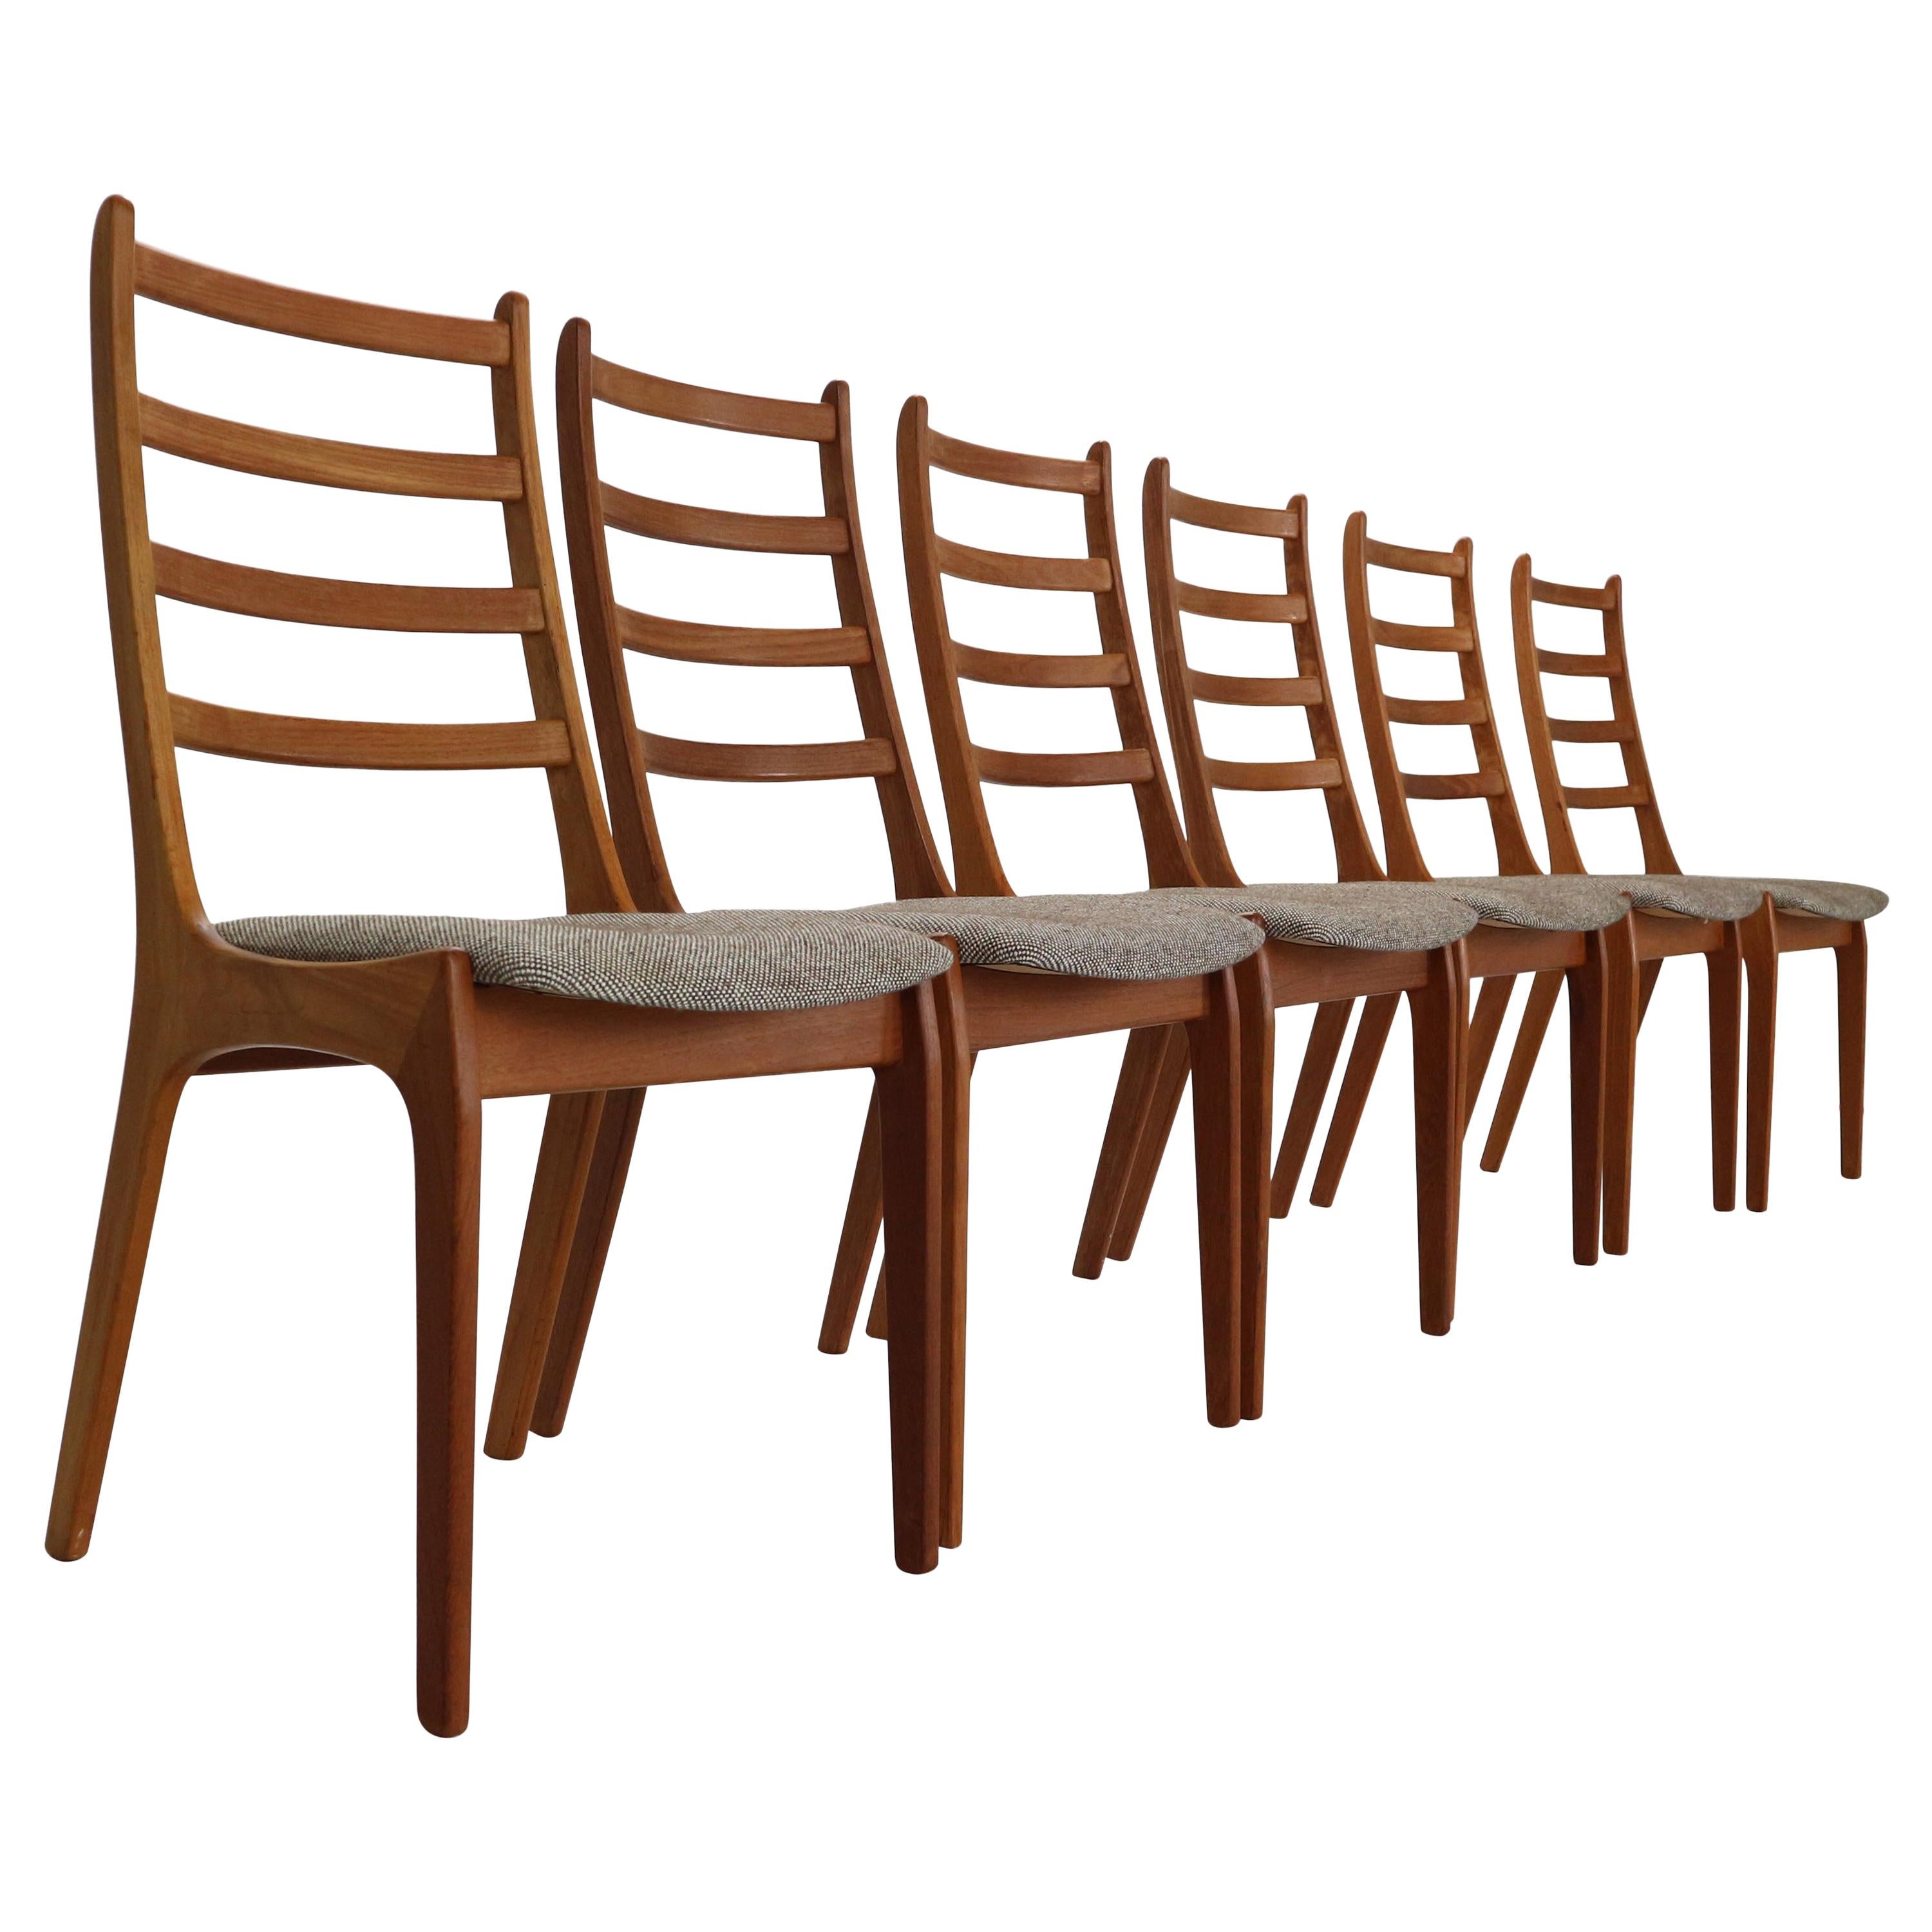 Set of Six Teak Ladder Dining Chairs, 1960s, Denmark